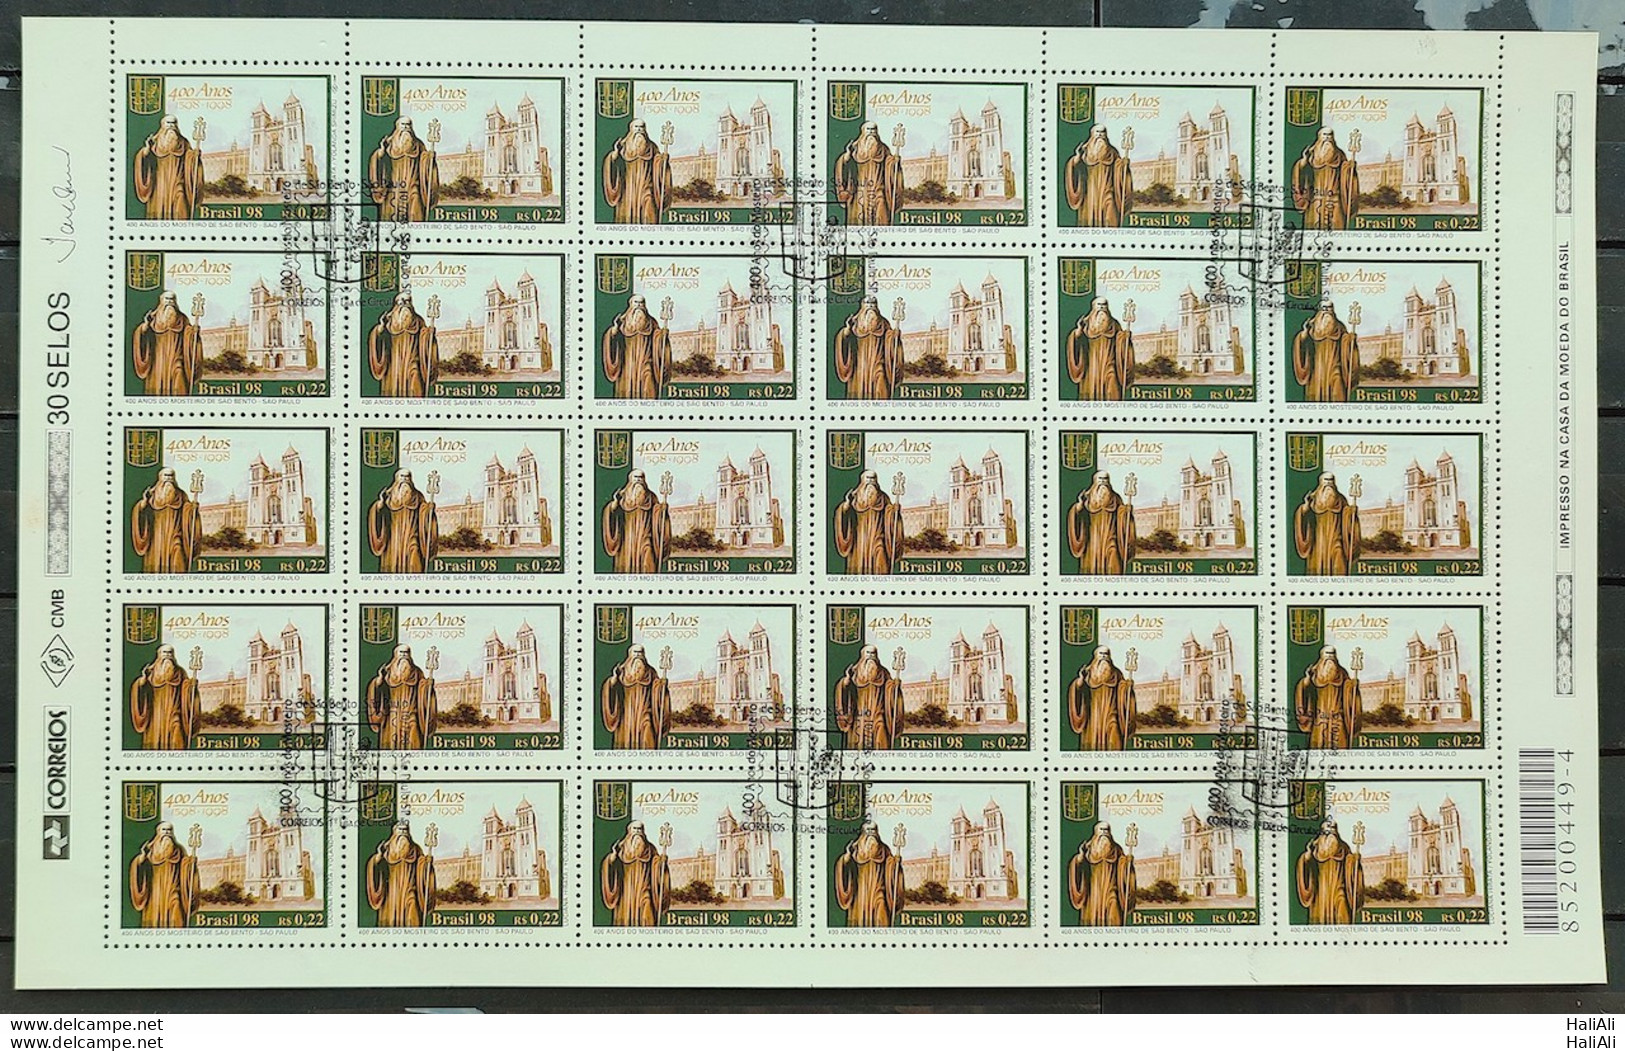 C 2142 Brazil Stamp Monastery Of Sao Bento Church Religion 1998 Sheet CBC SP - Unused Stamps